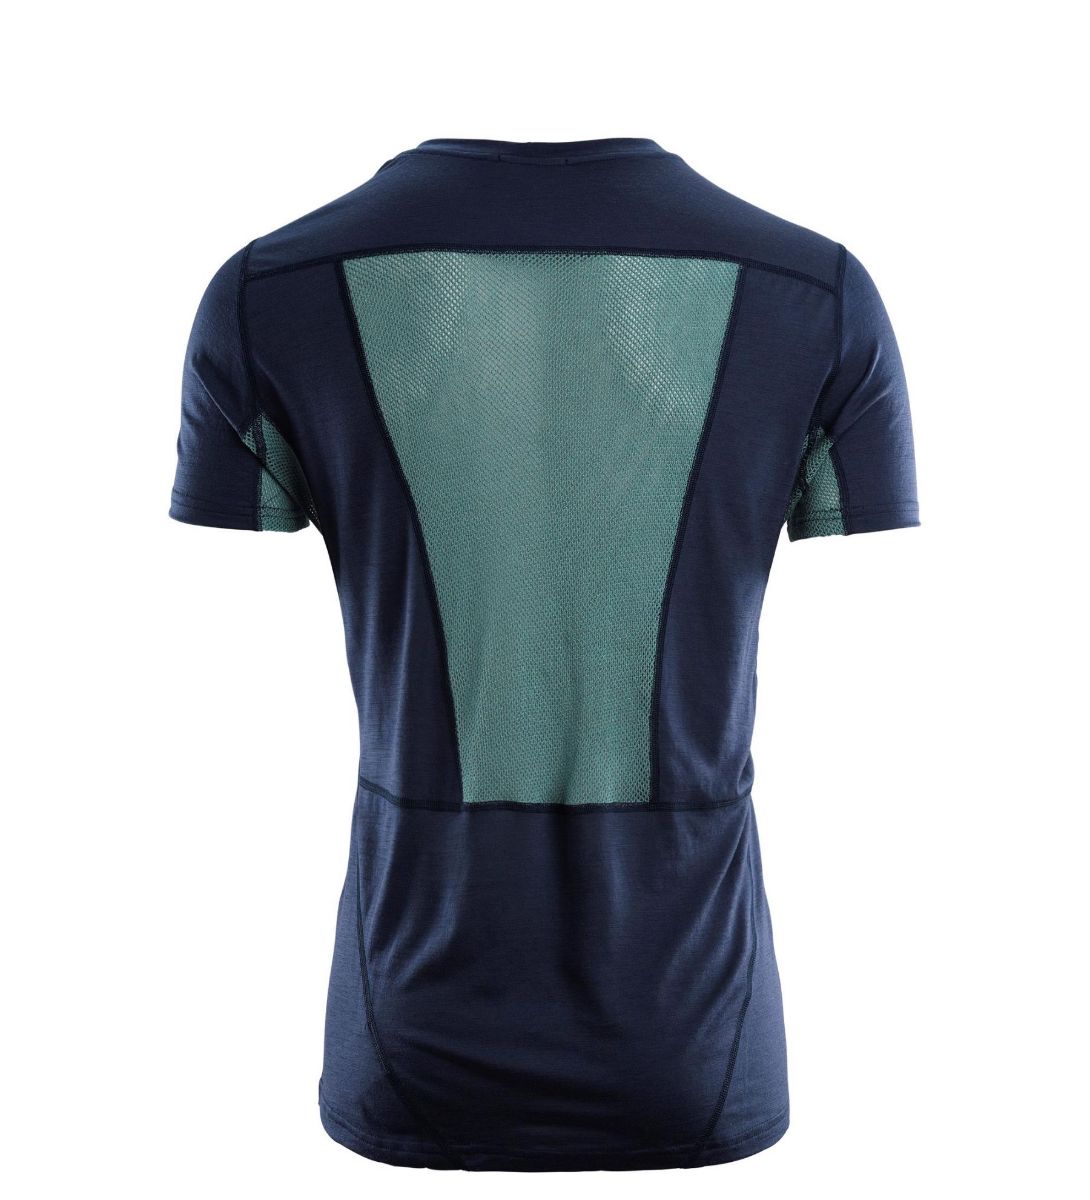 aclima-lightwool-sports-t-shirt-ms-navy-blazer-north-atlantic